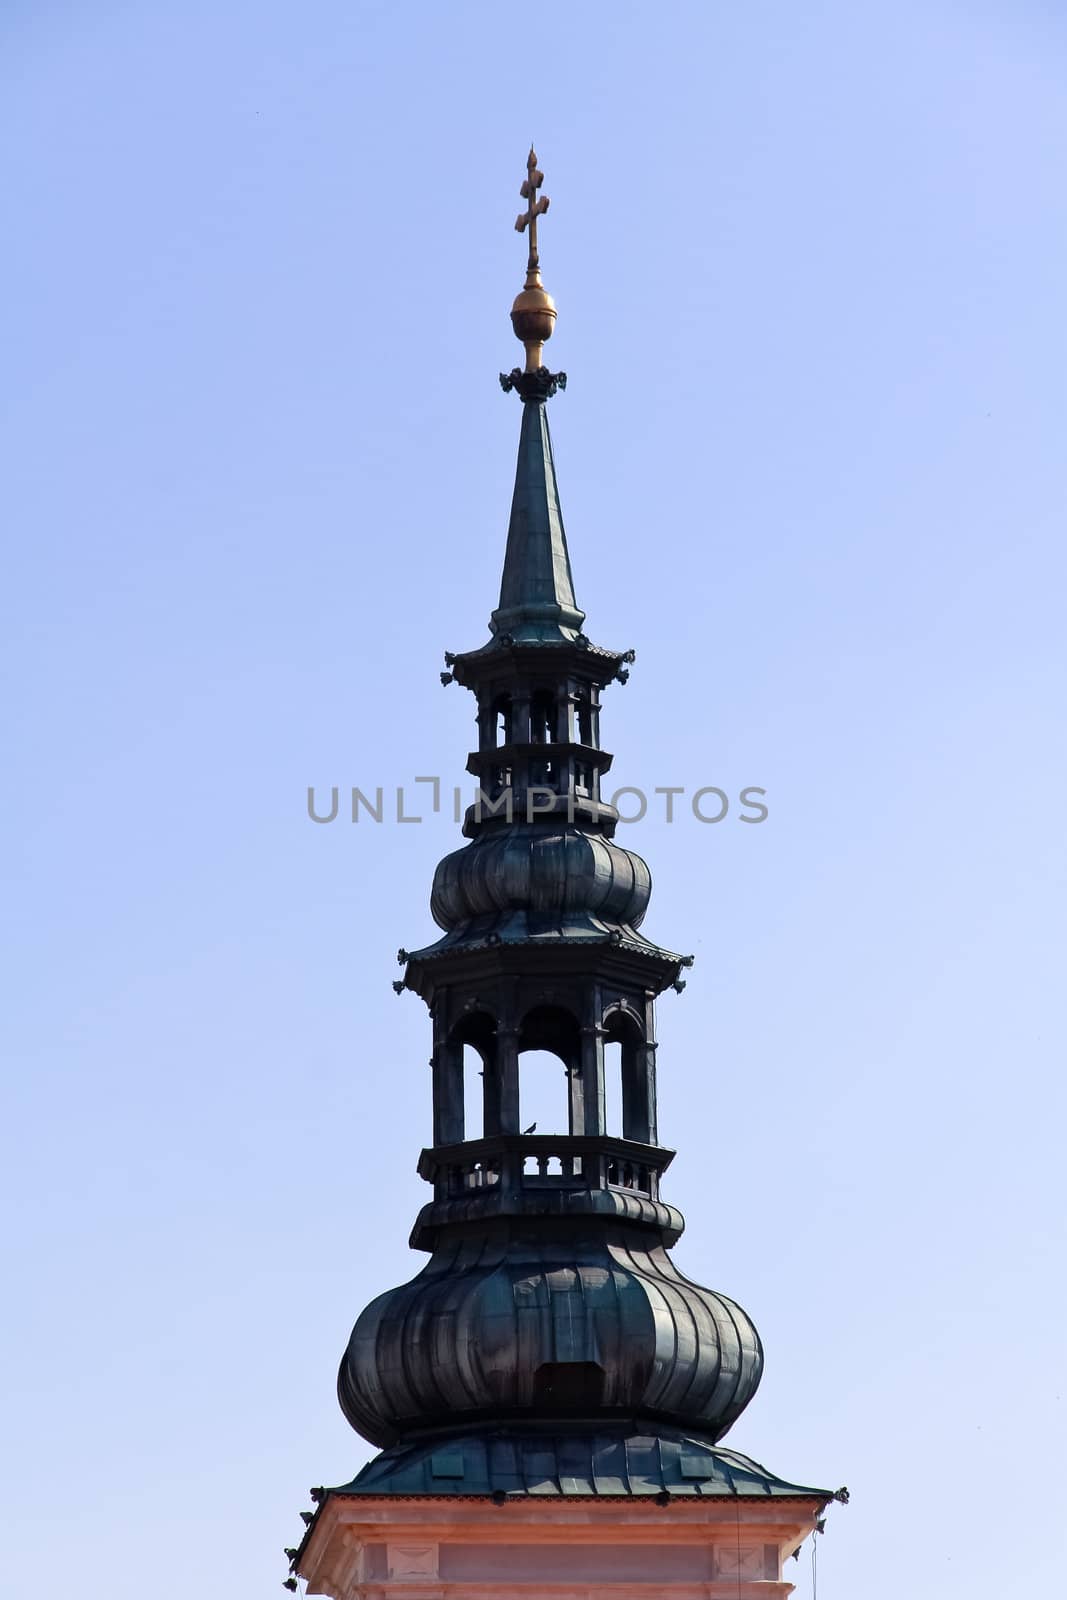 The steeple of the church St. Veit in Krems, Austria.